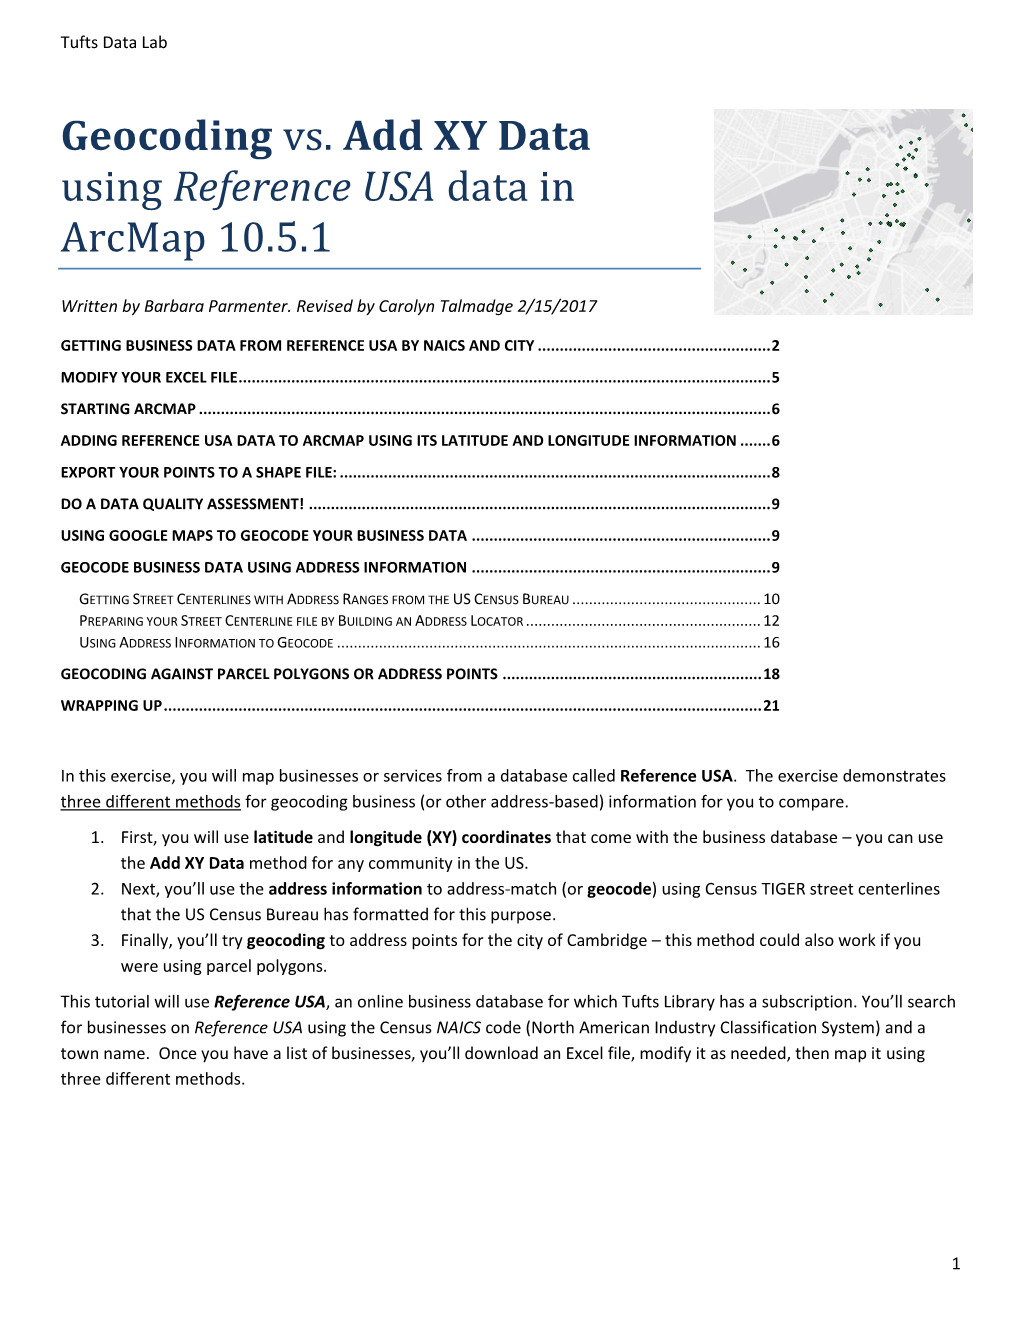 Geocoding Vs. Add XY Data Using Reference USA Data in Arcmap 10.5.1